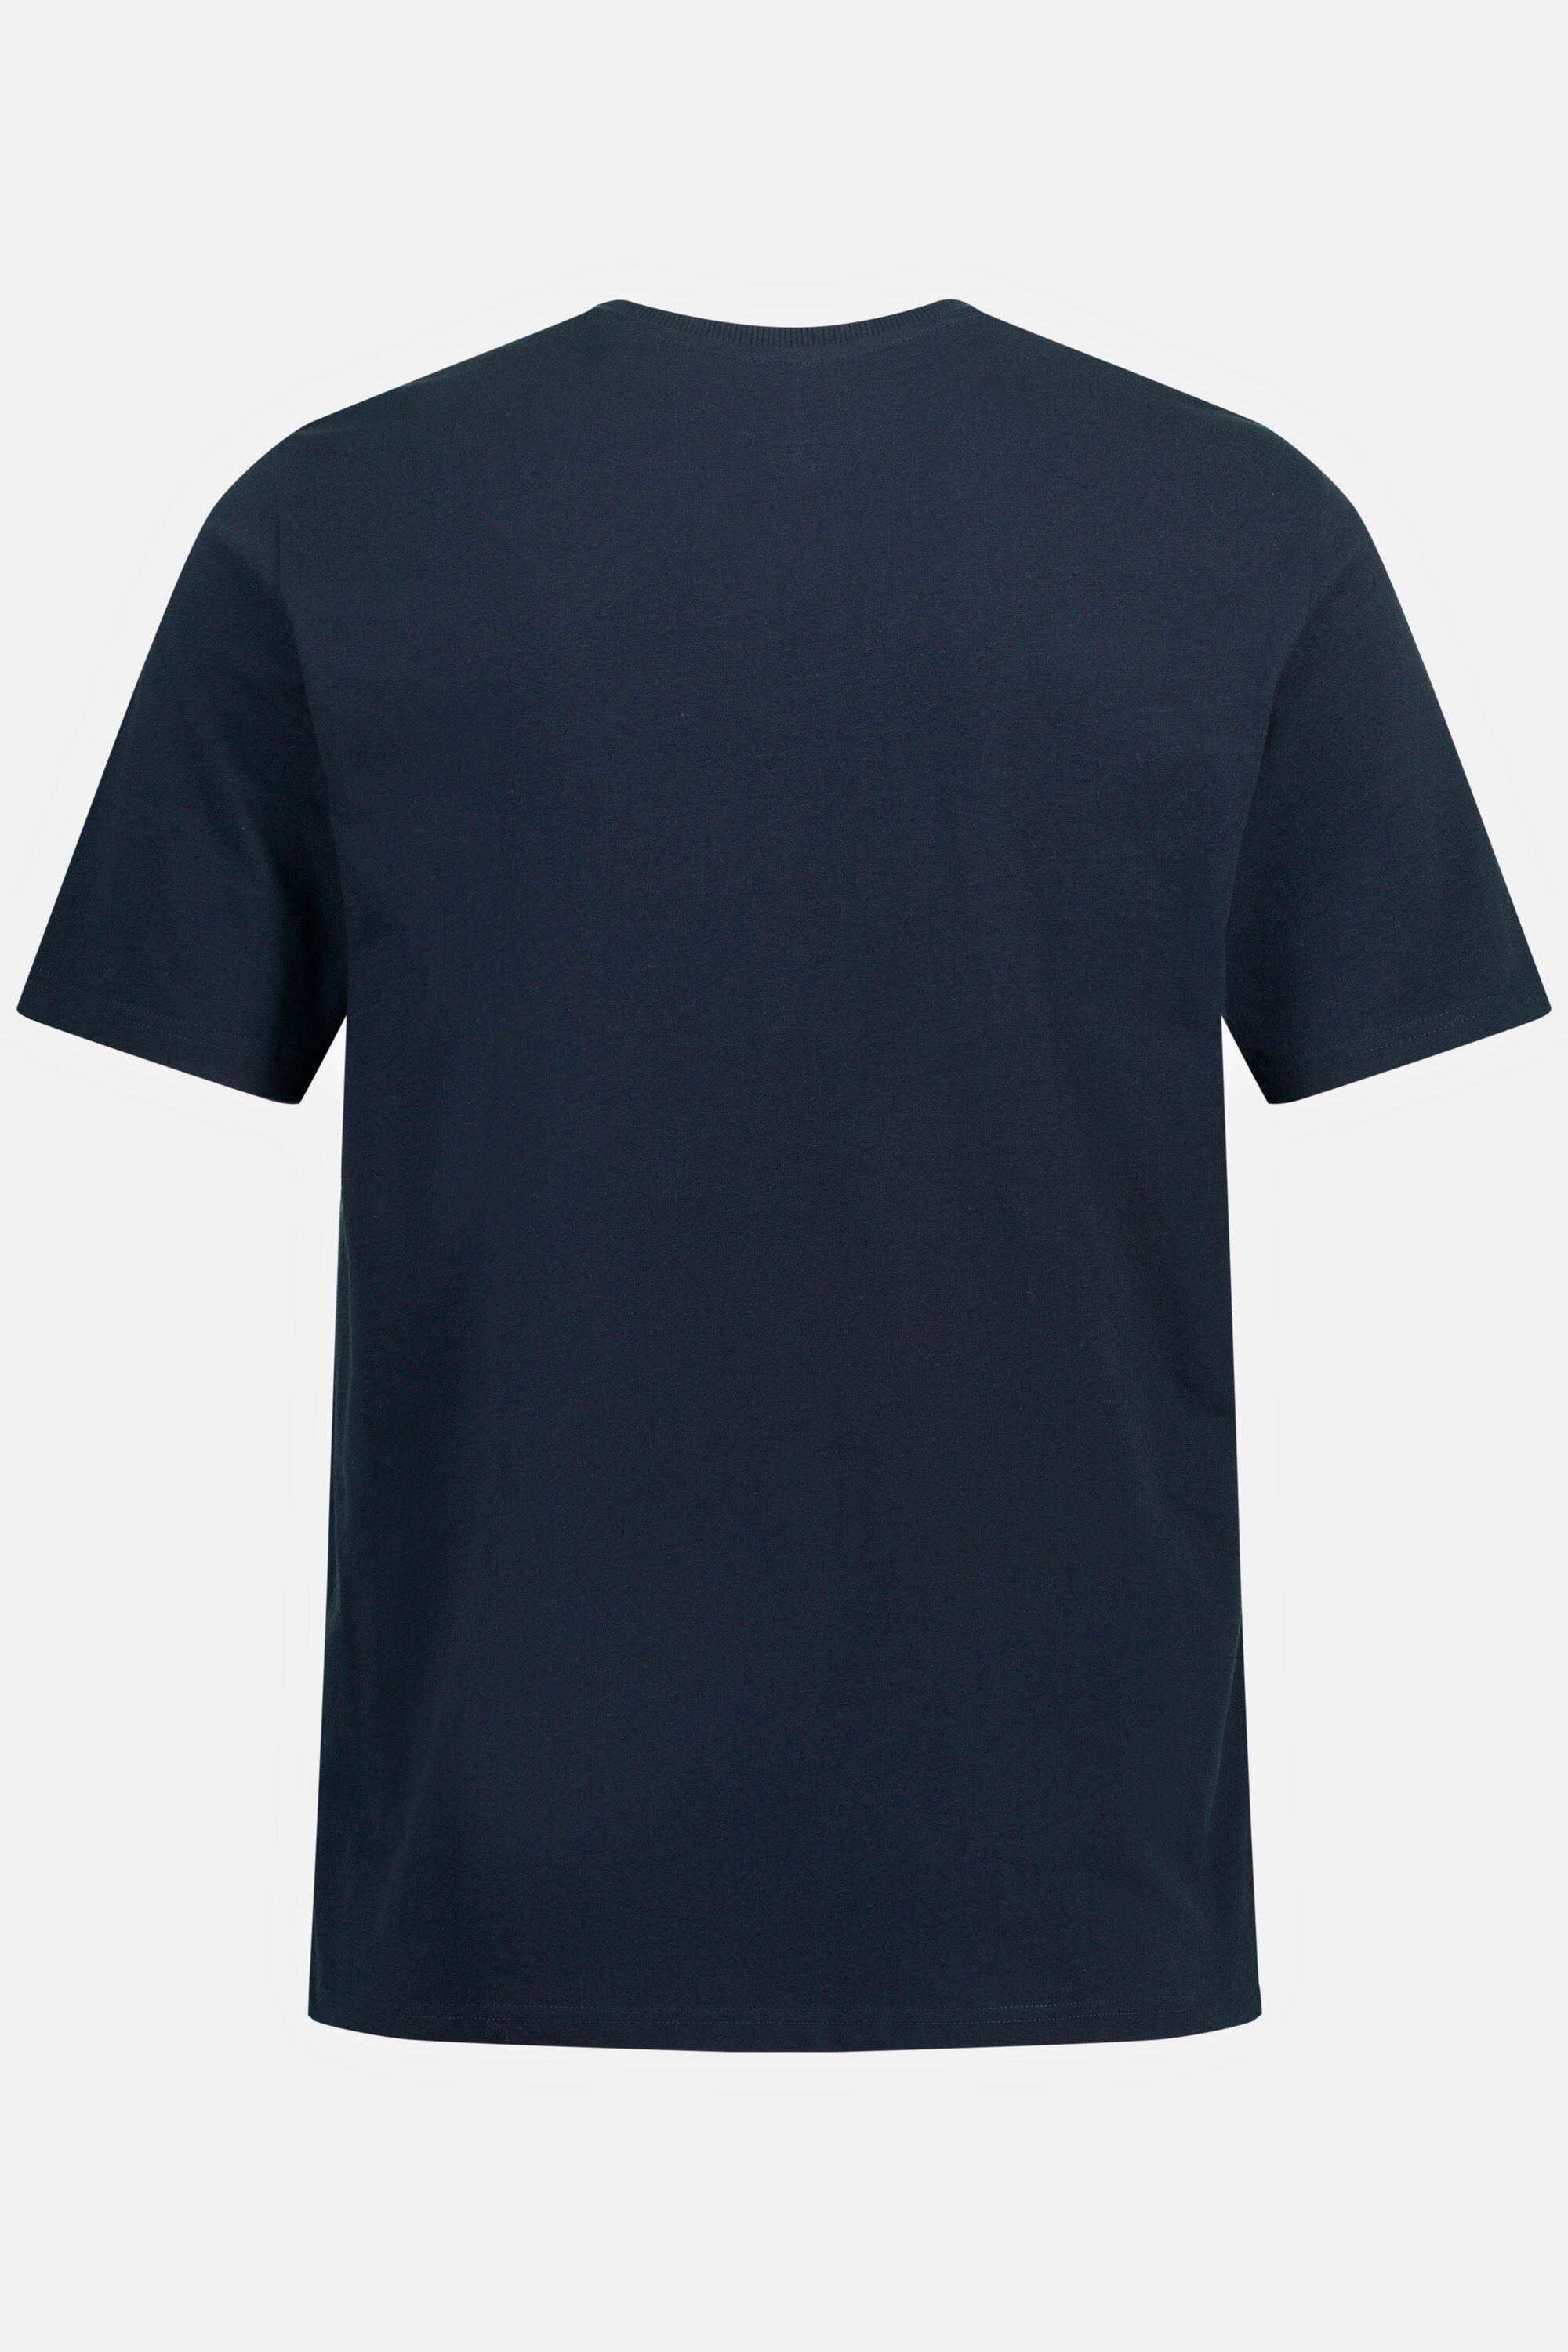 Brustprint JP1880 T-Shirt Halbarm Rundhals Henley